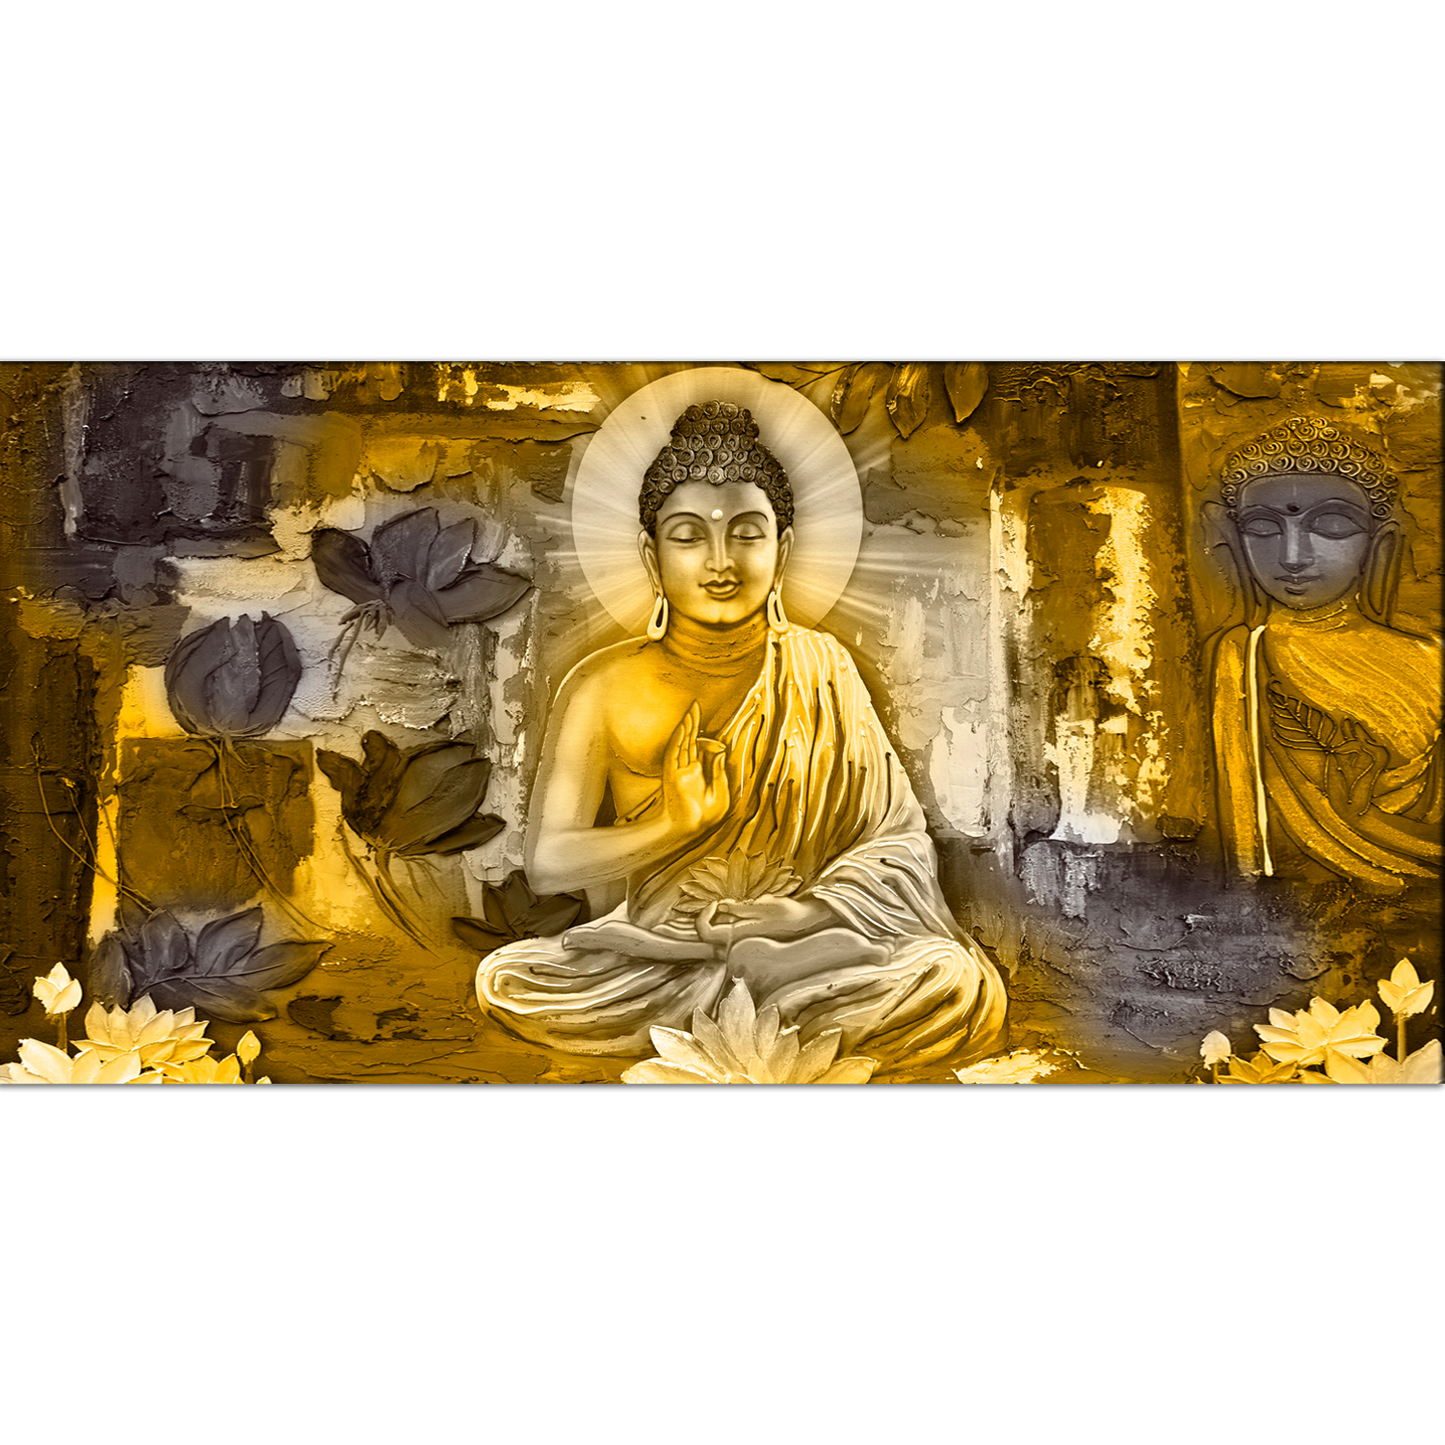 Buddha meditation under a tree Canvas Print Wall Painting